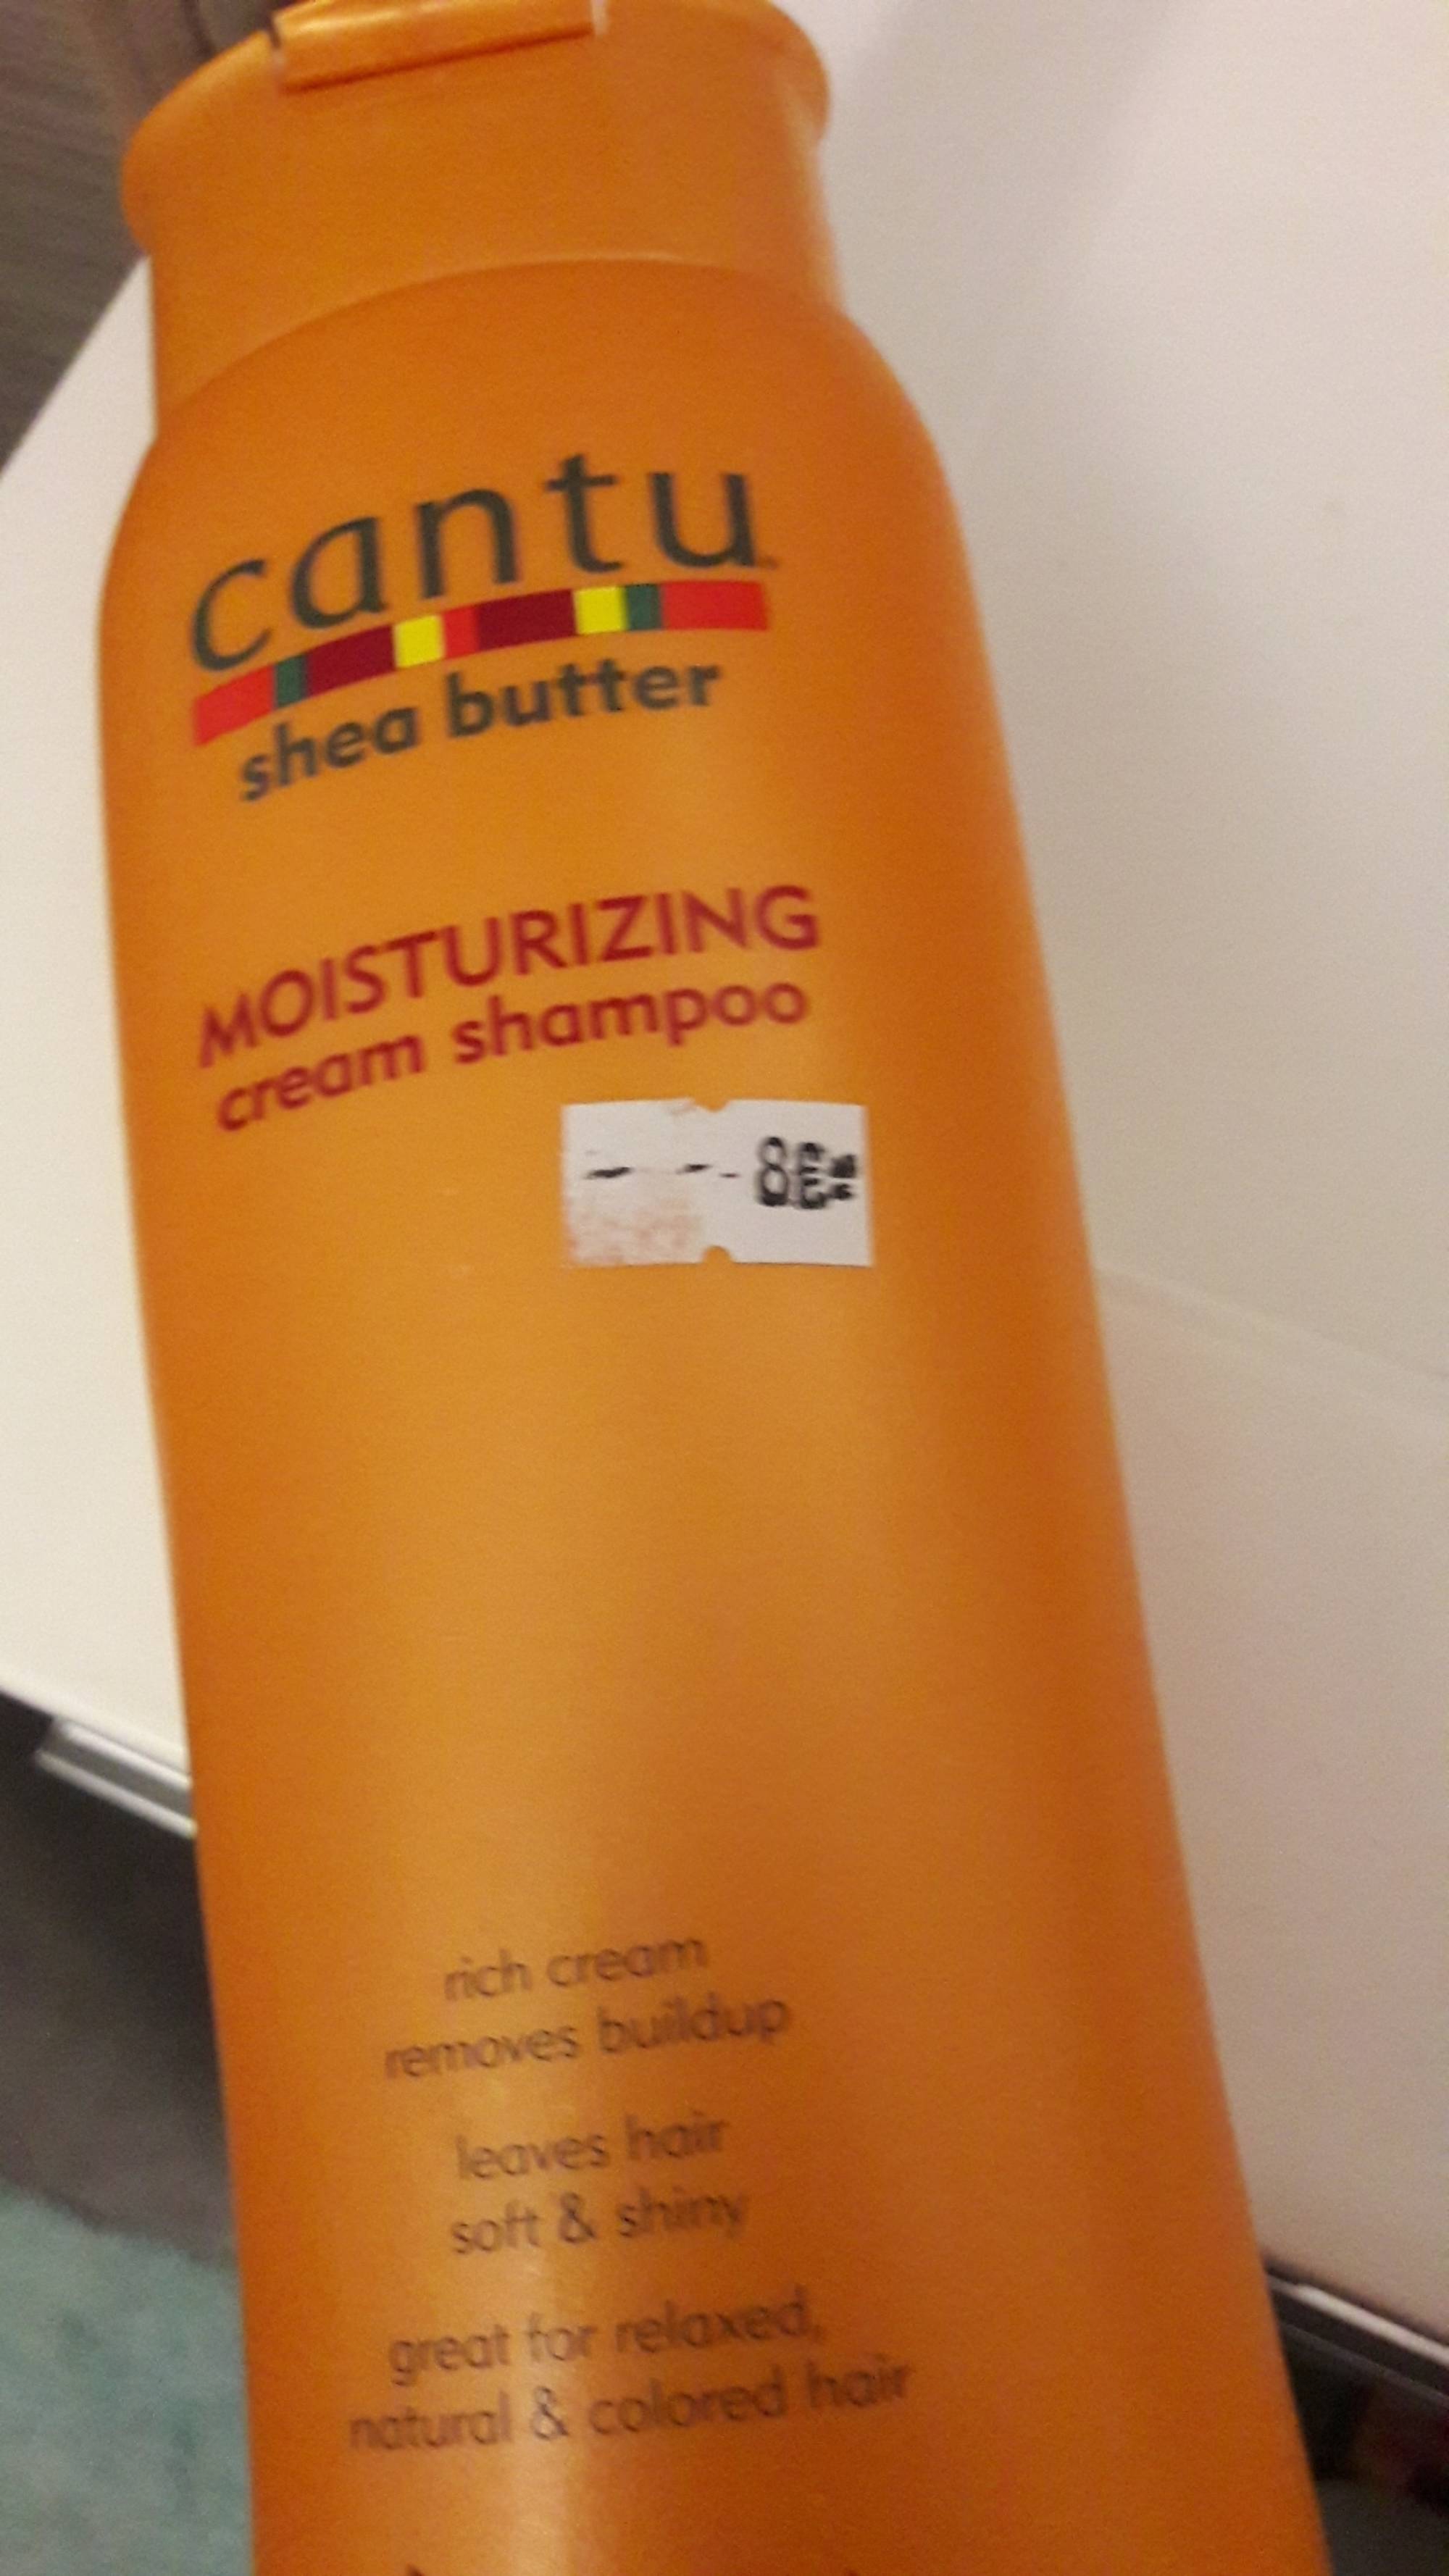 CANTU - Moisturizing - Cream shampoo